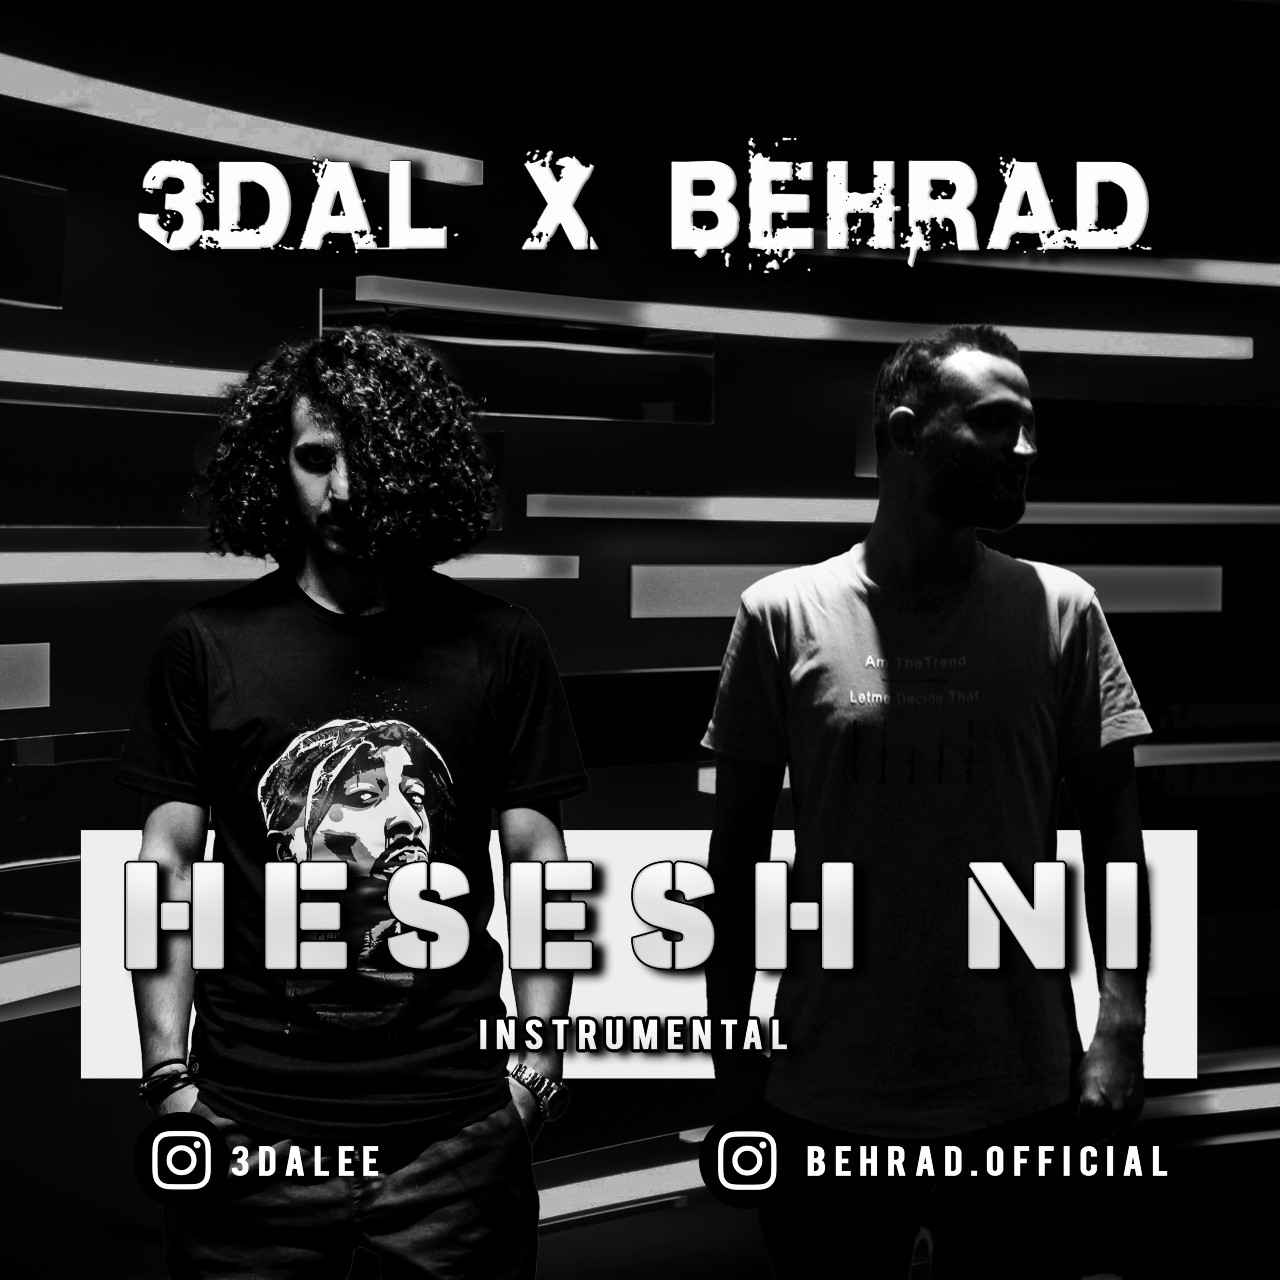 3Dal x Behrad - Hesesh Ni (Instrumental)